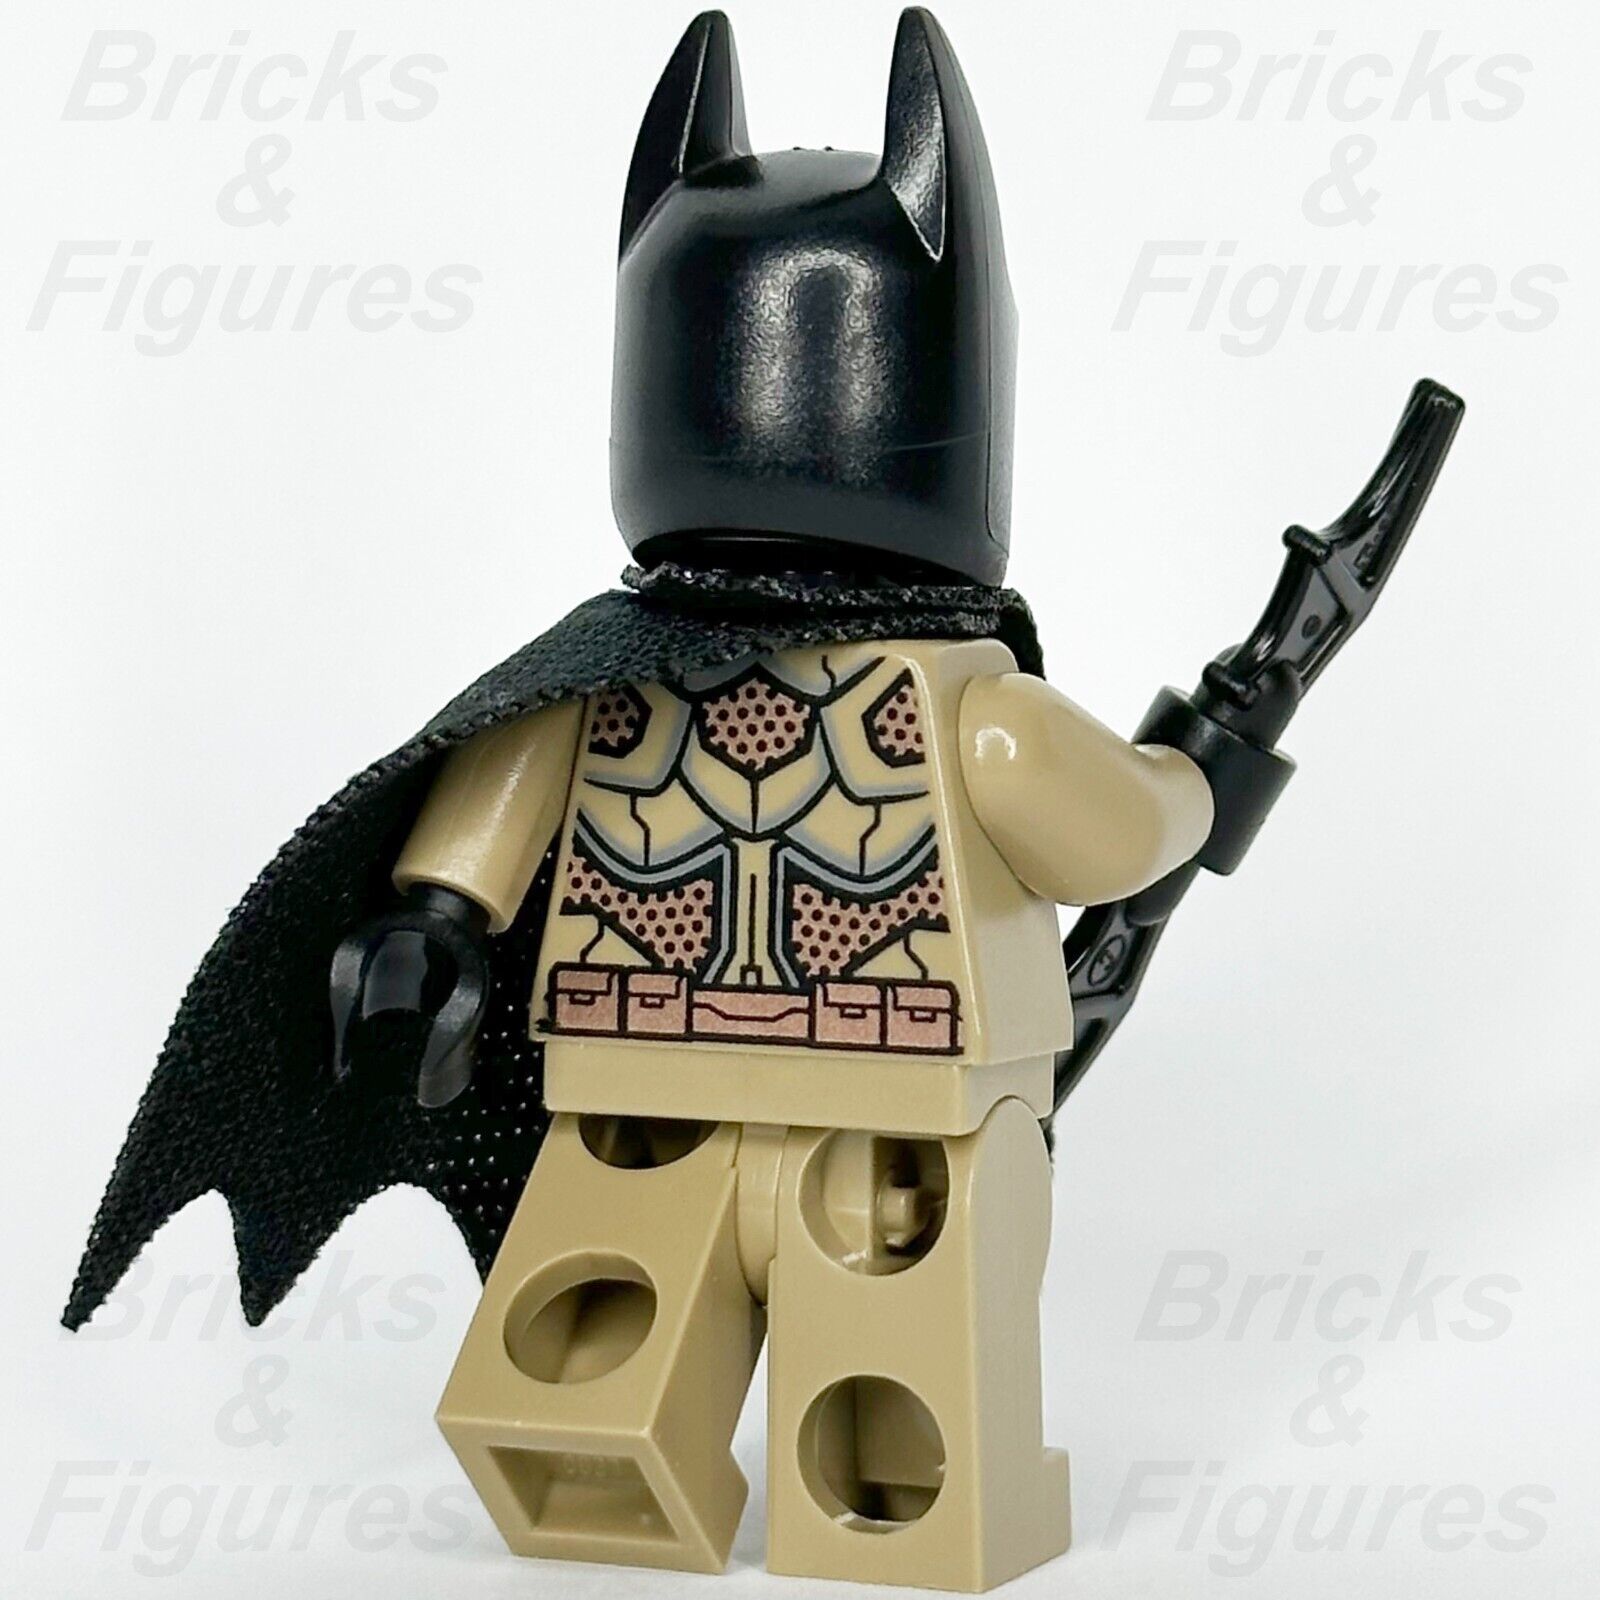 LEGO DC Super Heroes Desert Batman Minifigure Bruce Wayne Batman 2 76056 sh288 3